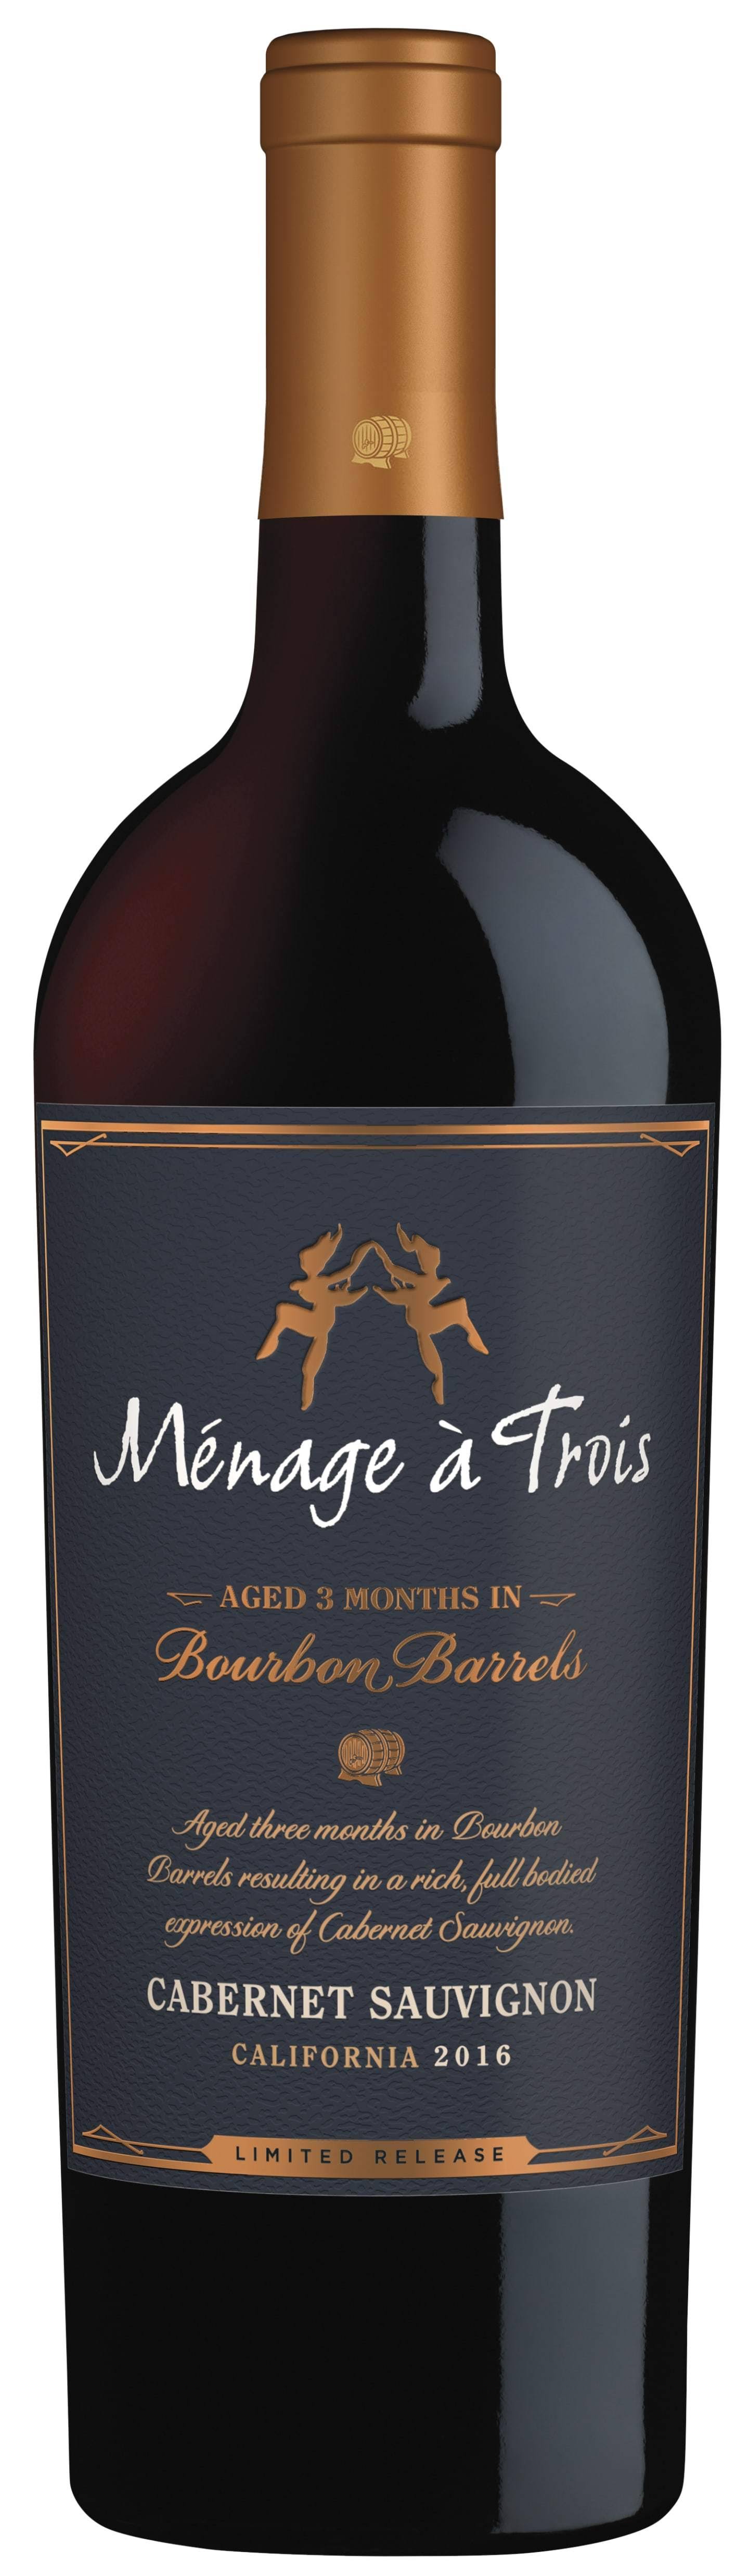 Menage A Trois Cabernet Sauvignon, Bourbon Barrels, California, 2016 - 750 ml